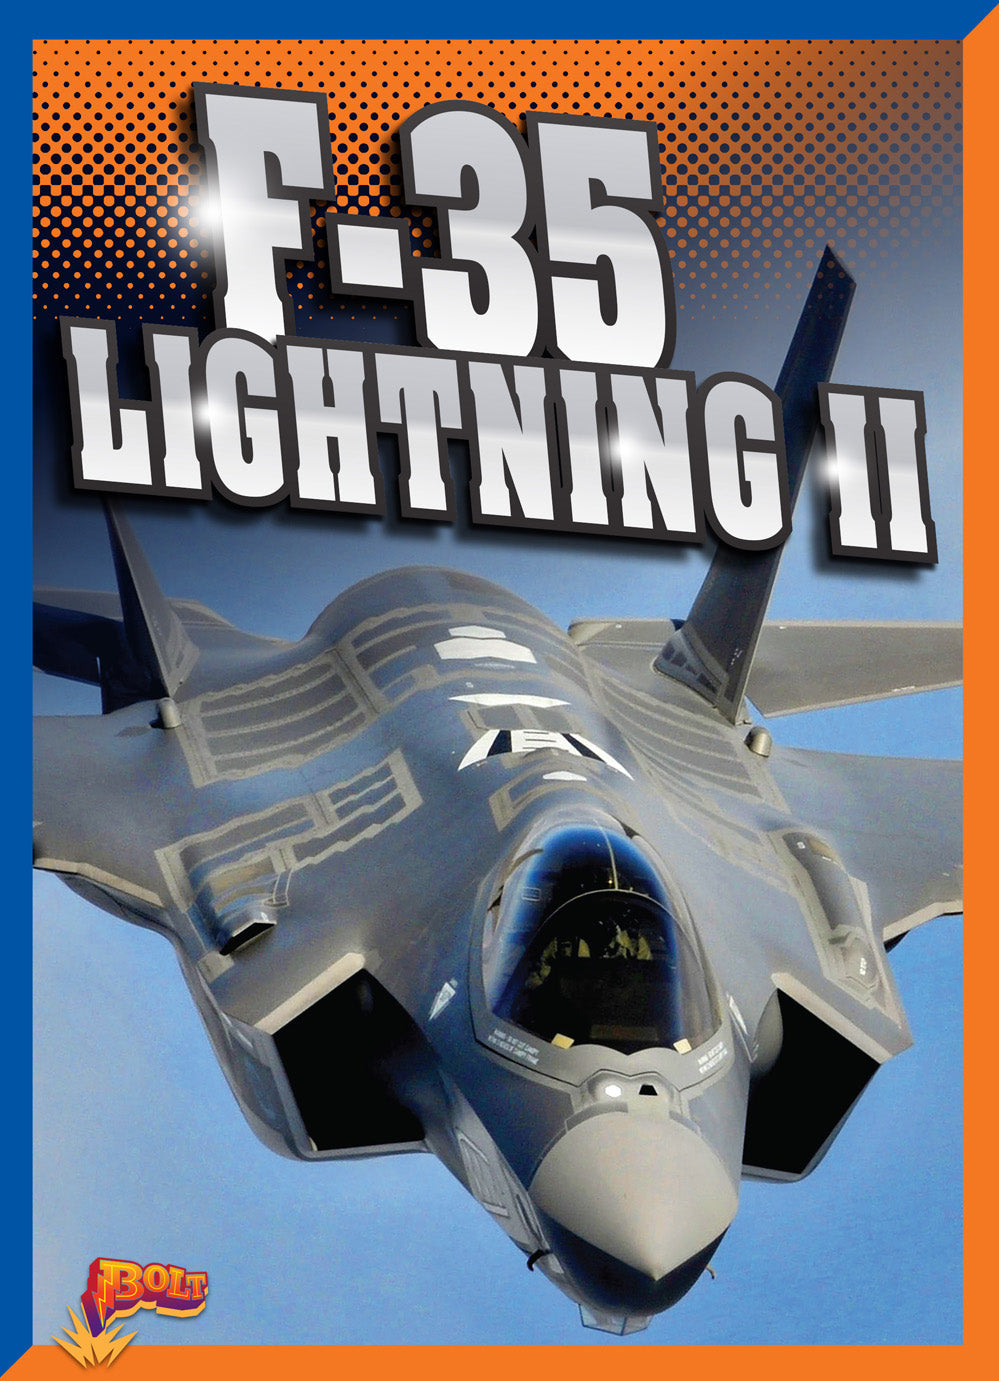 Air Power: F35 Lightning II